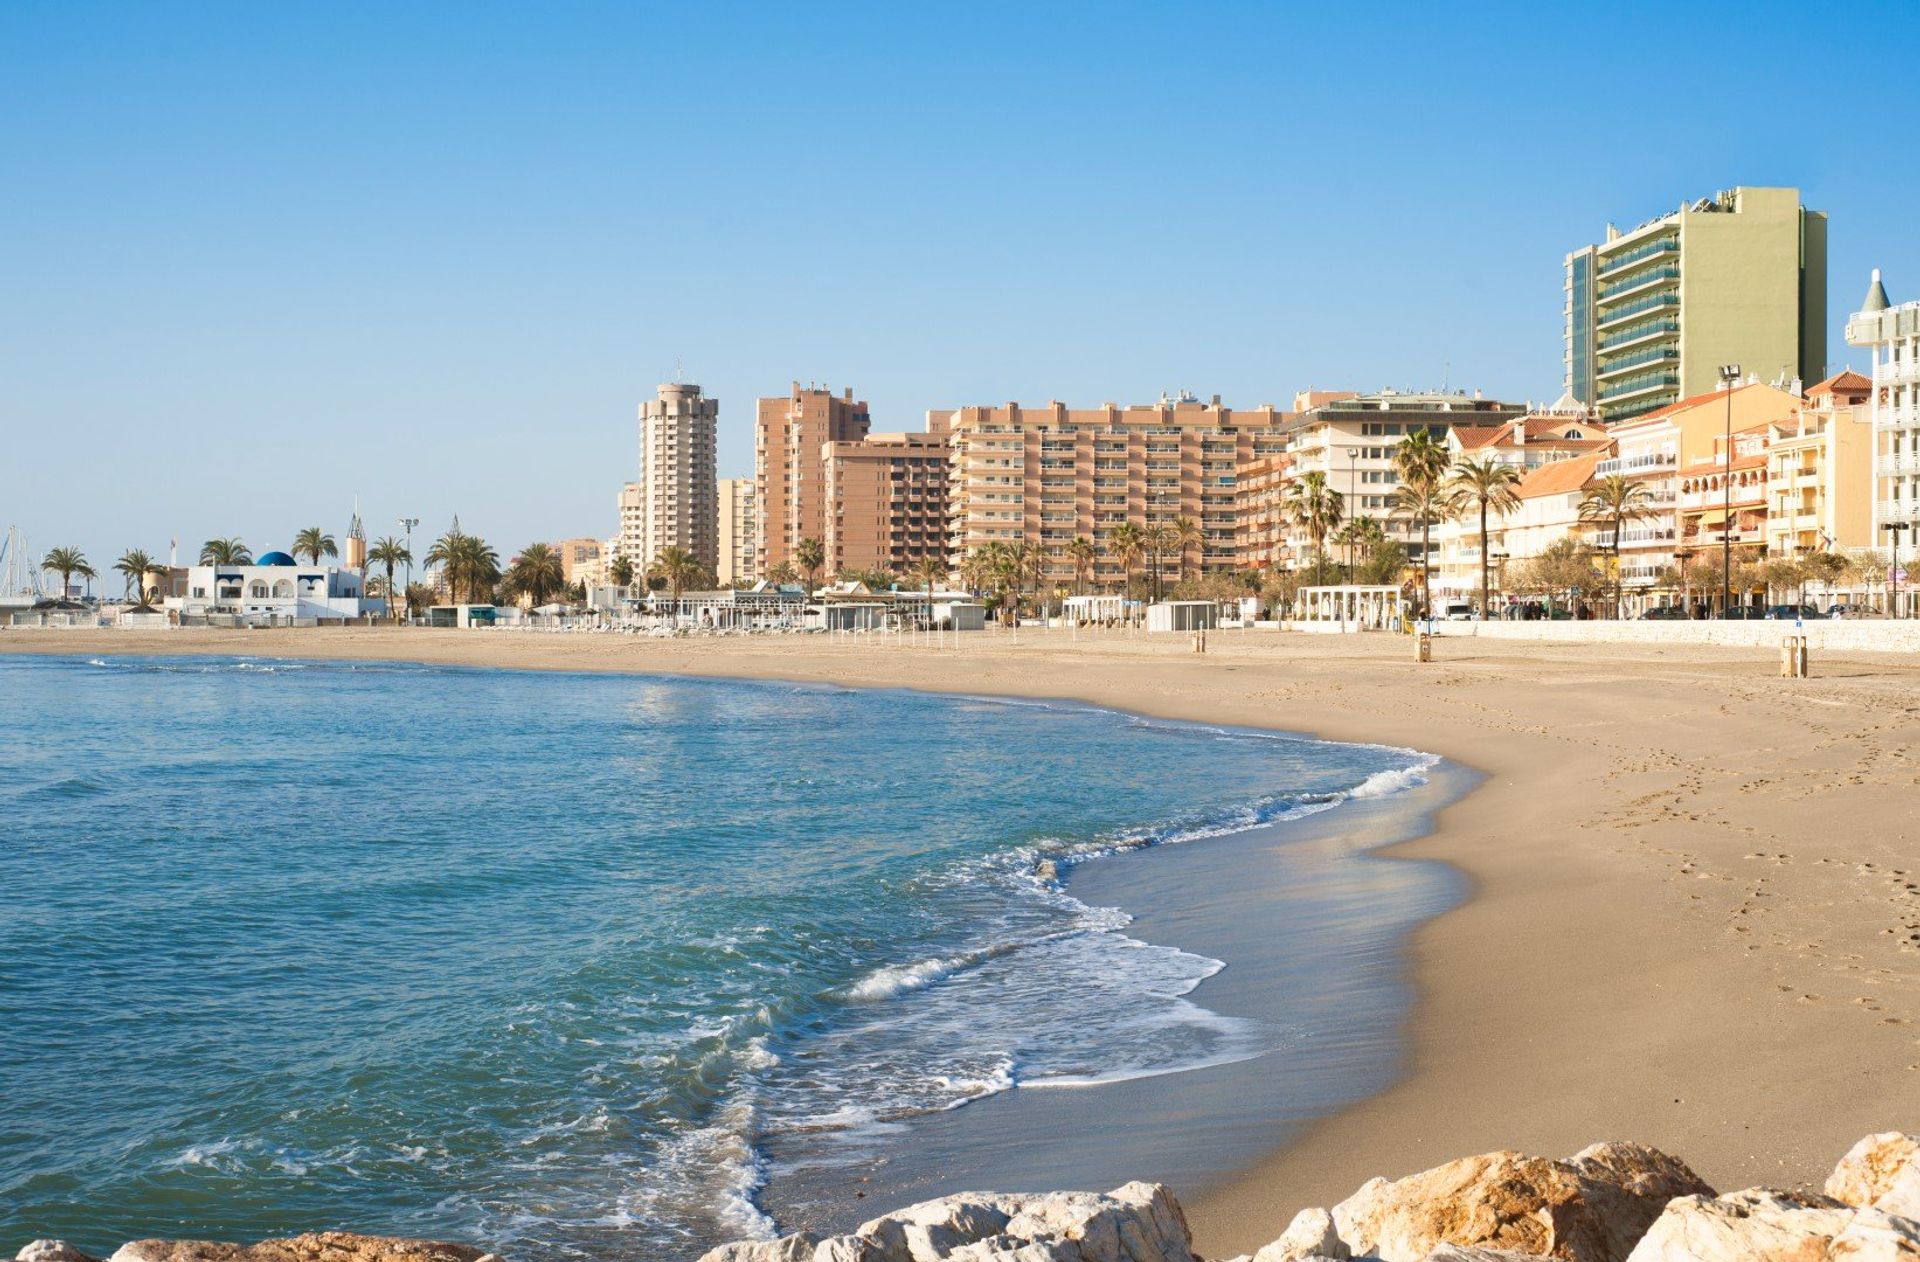 Local Blue Flag El Castillo beach, offers modern facilities, play areas and abundance of bars and shops